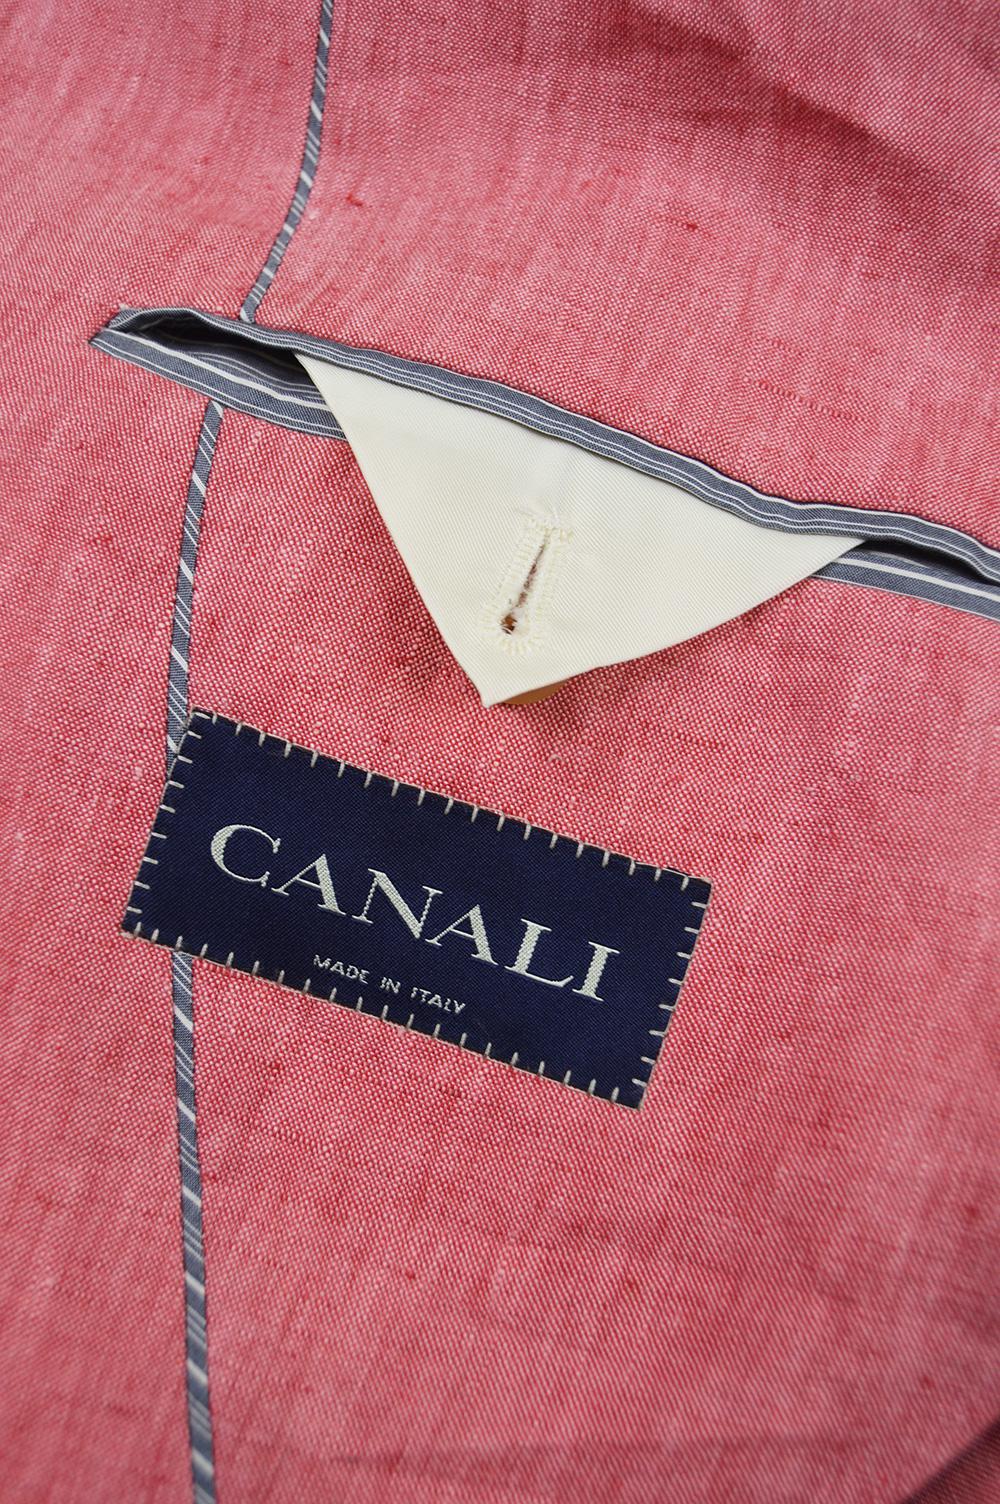 Canali for Holt Renfrew Men's Salmon Pink Linen Sport Coat Blazer Jacket 44R 1